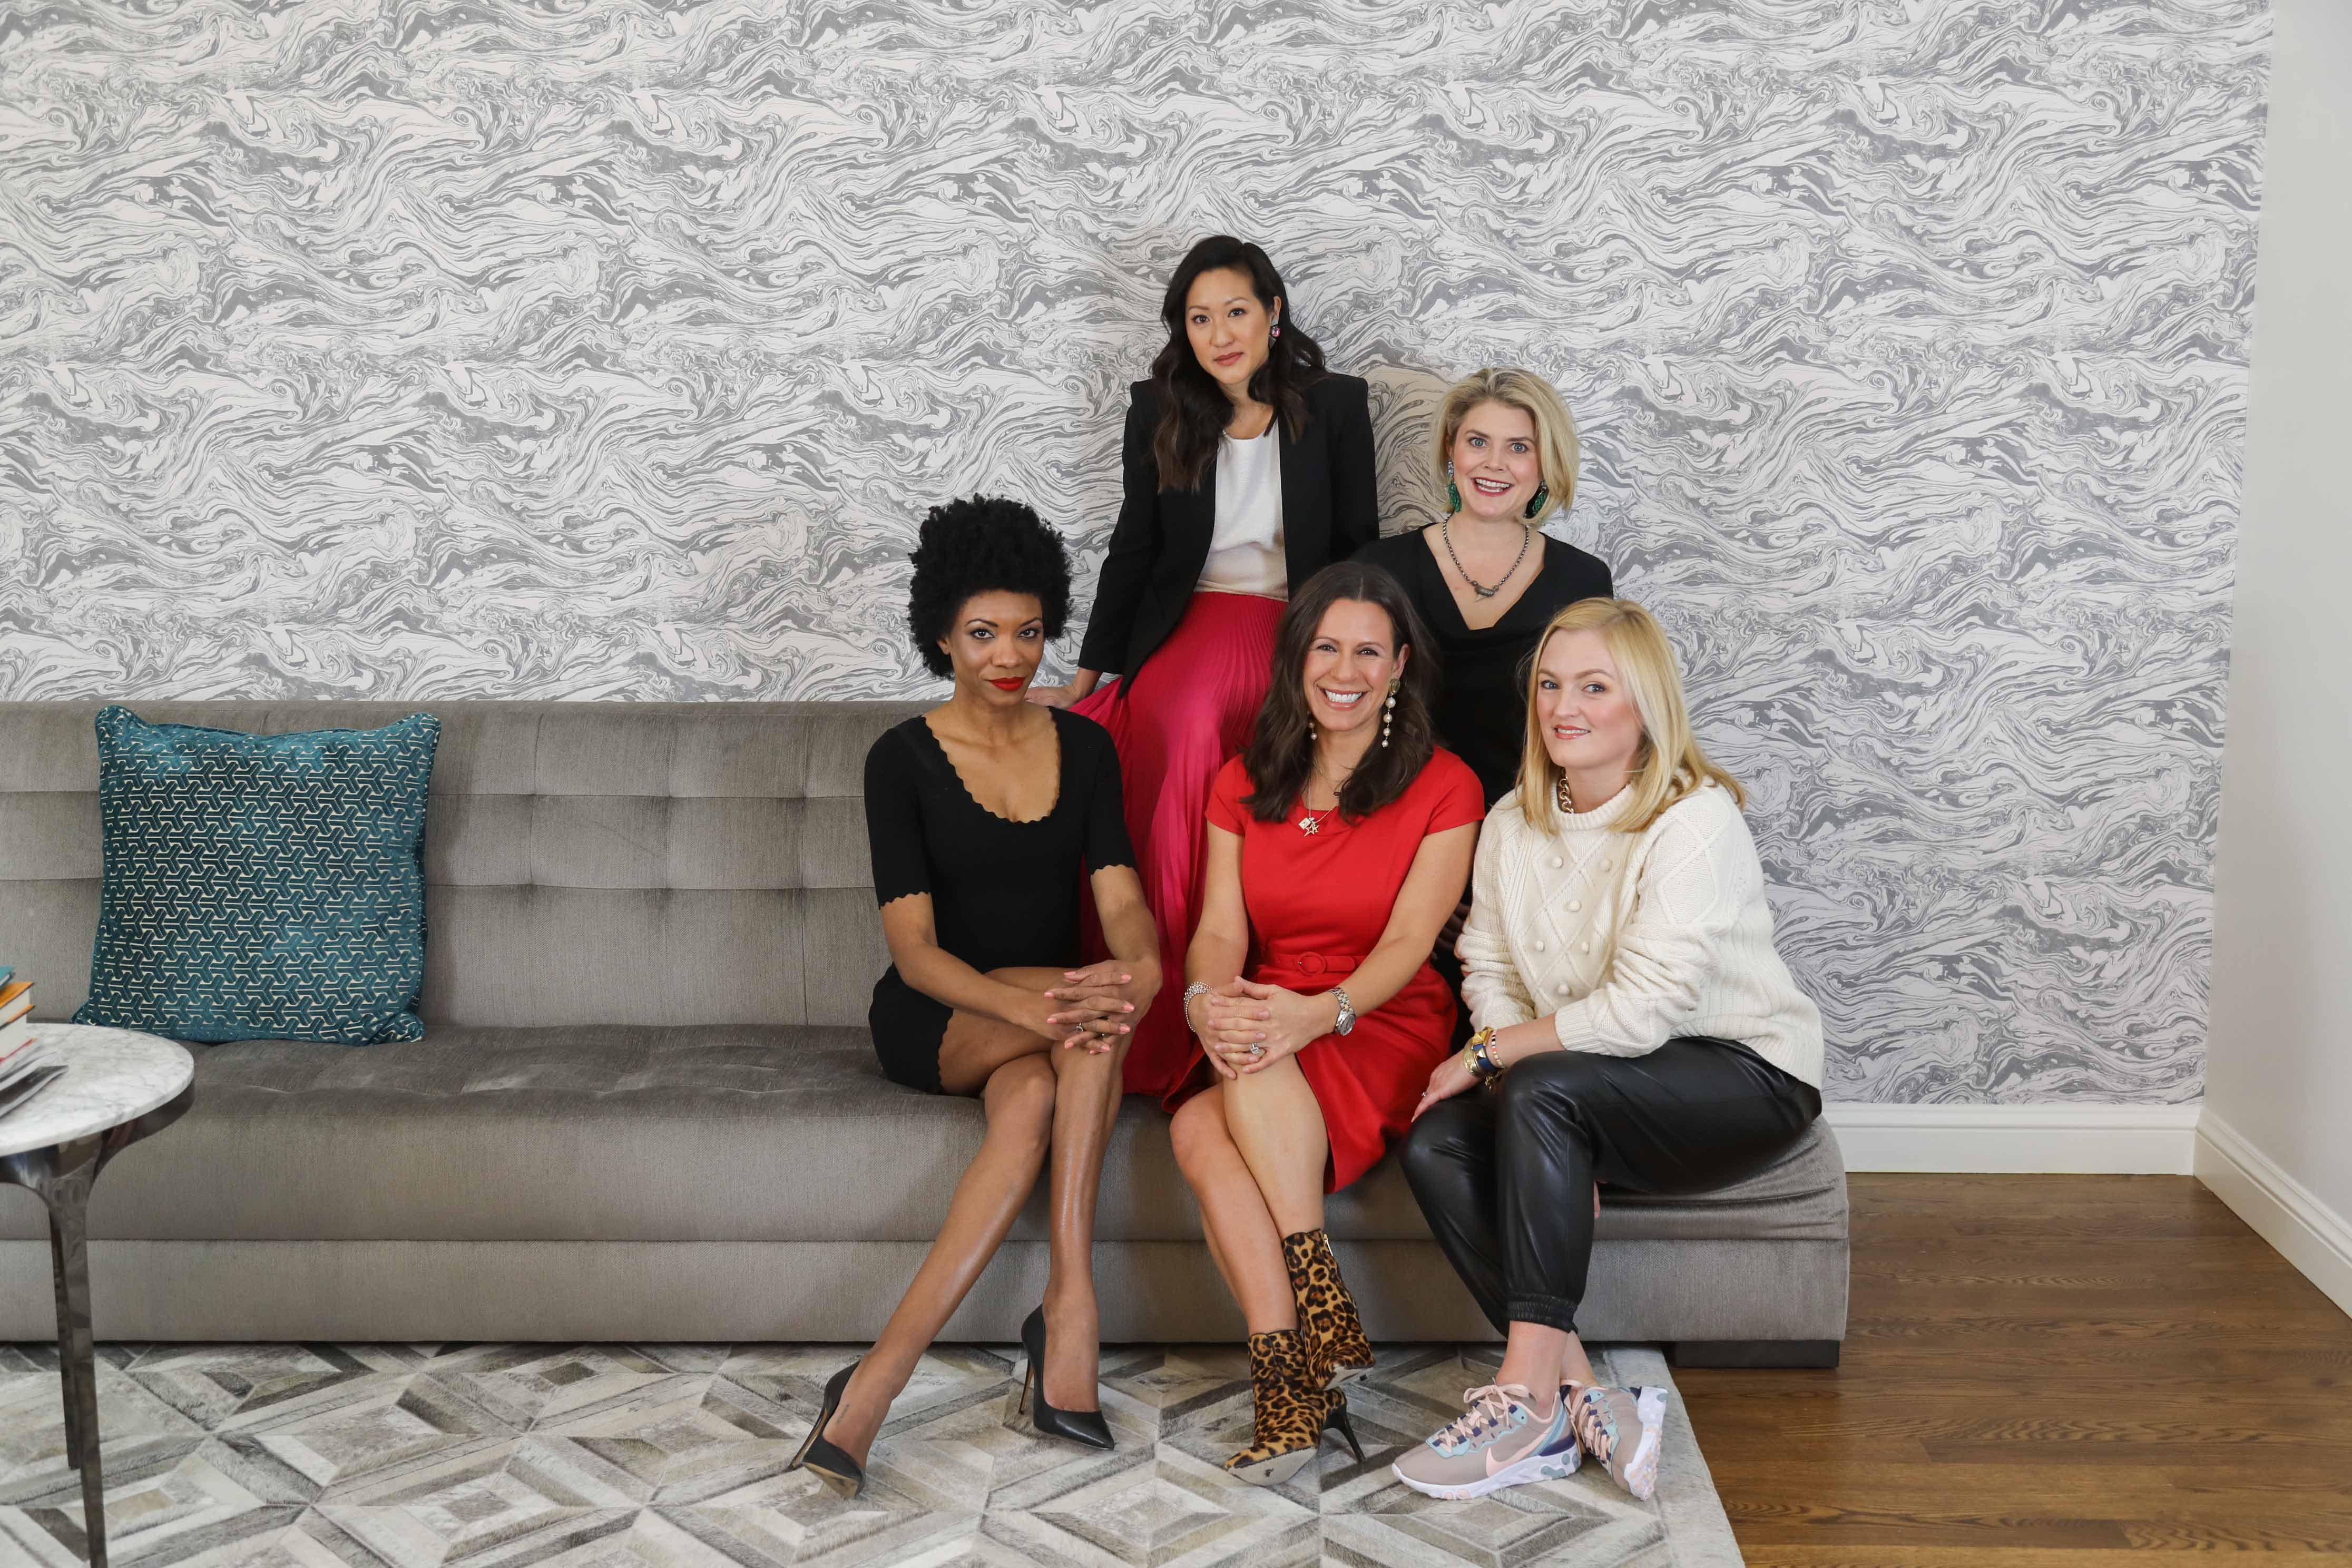 Meet the Members of Denver's New All-Women Podcast